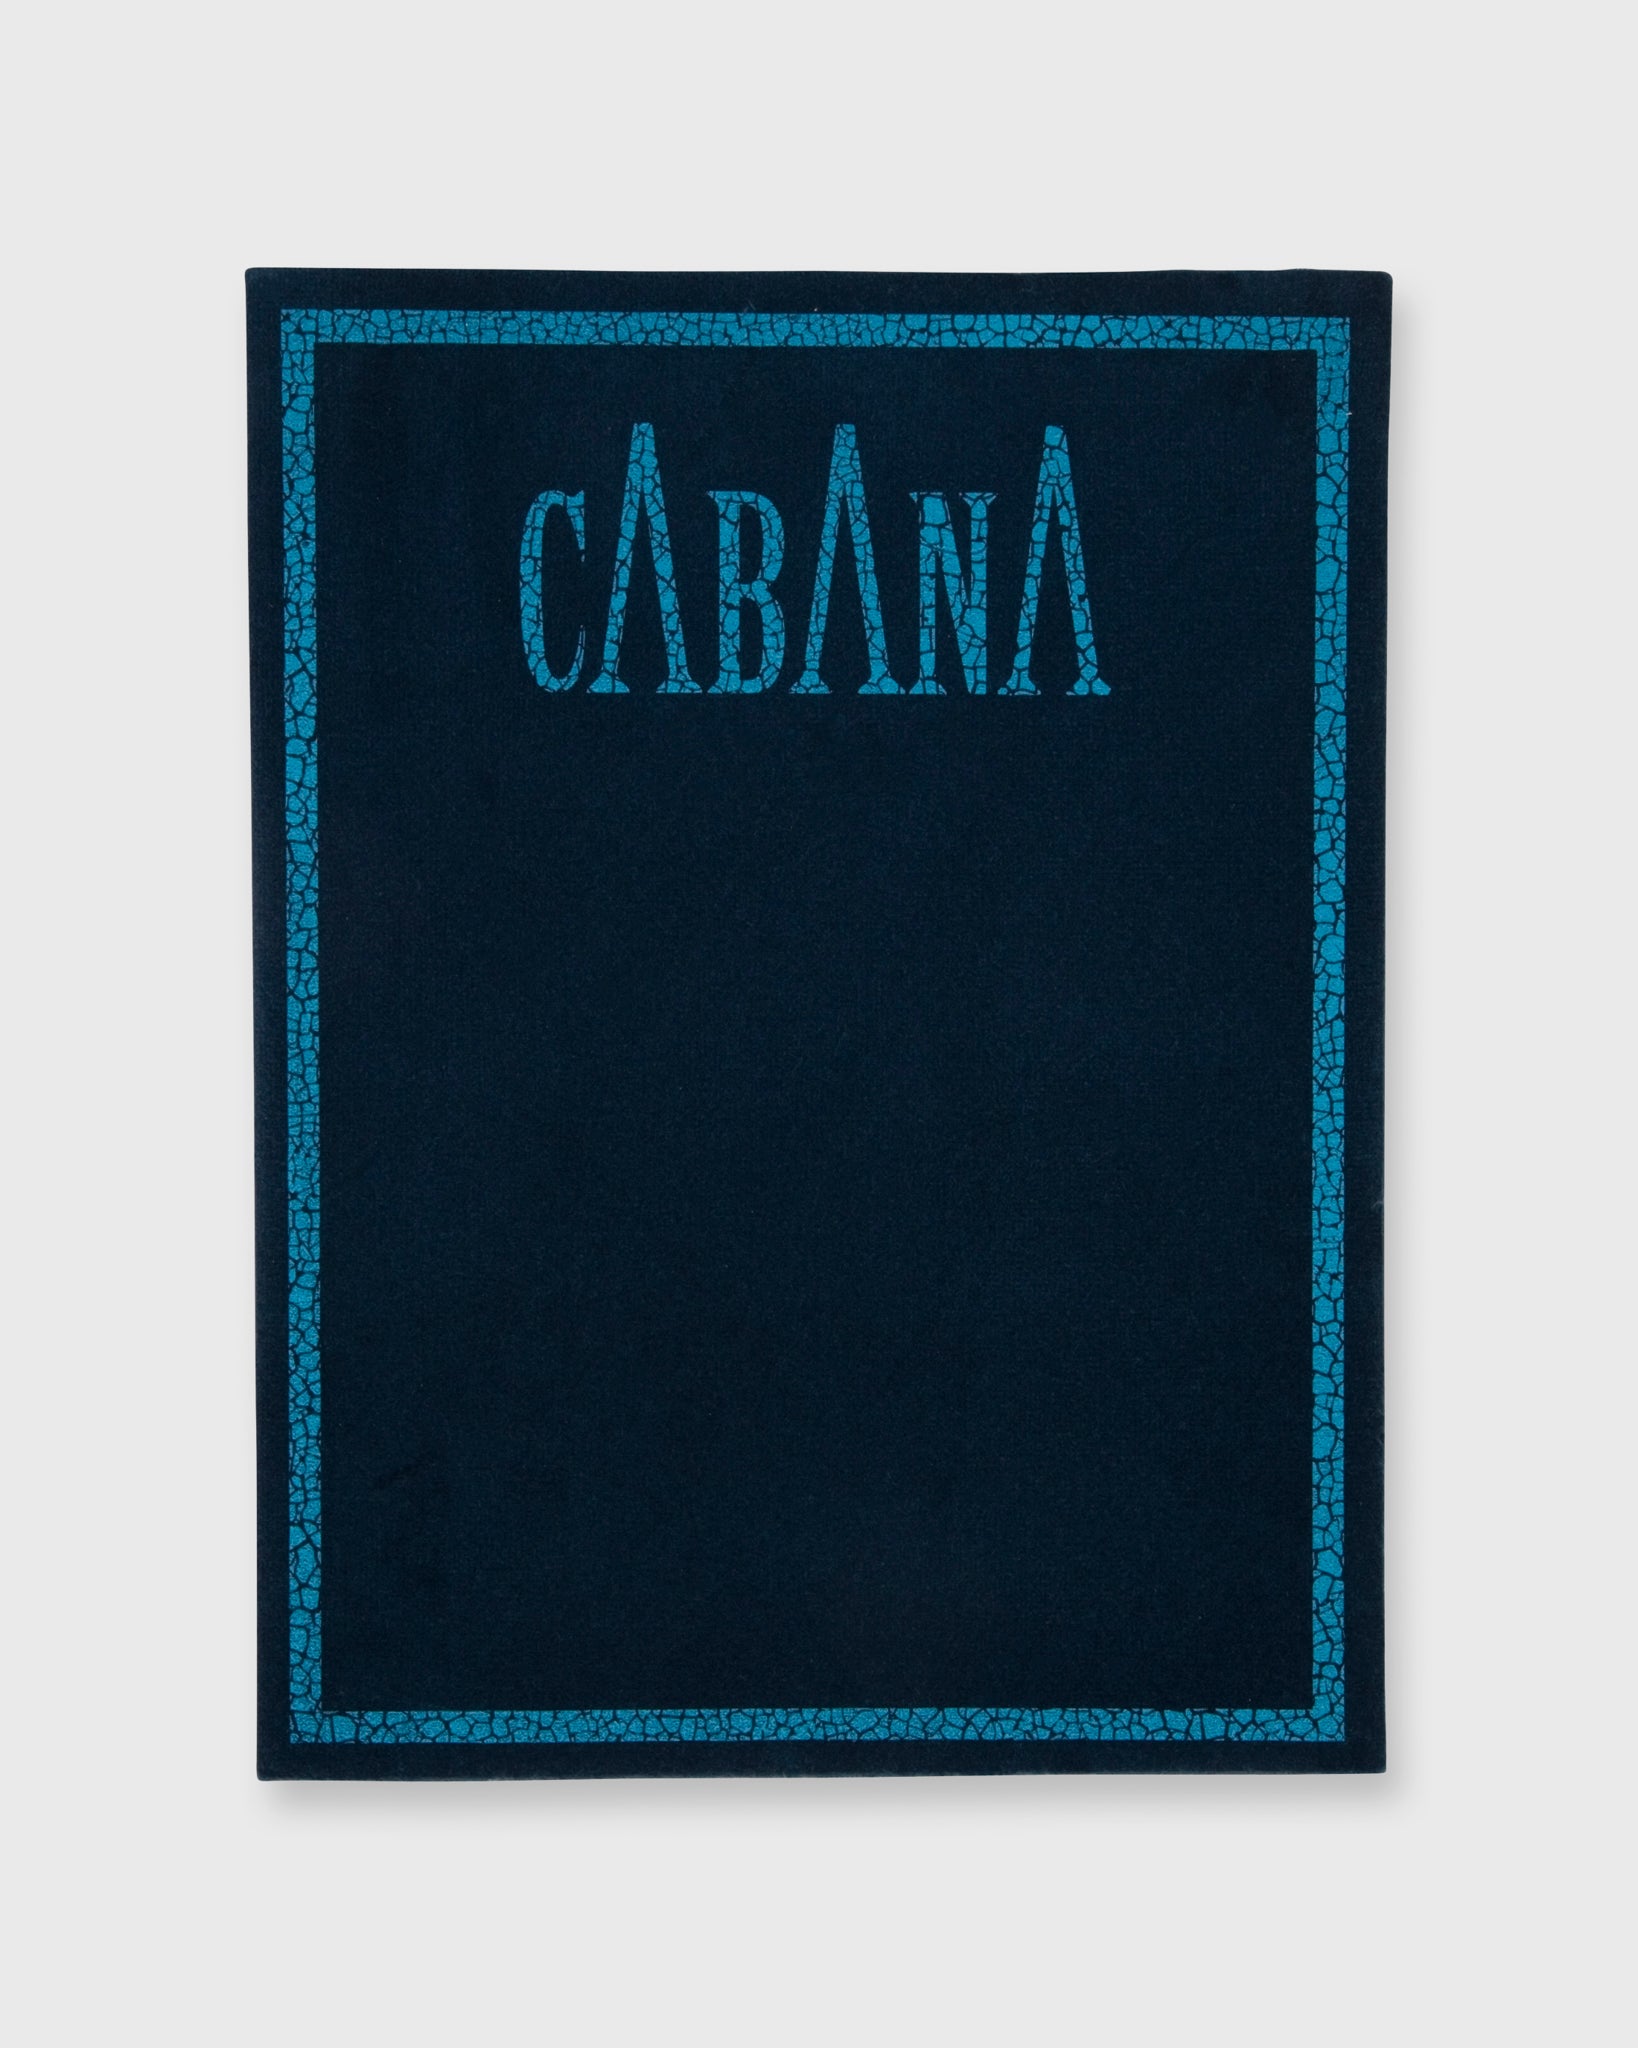 Cabana Magazine - Issue No. 15